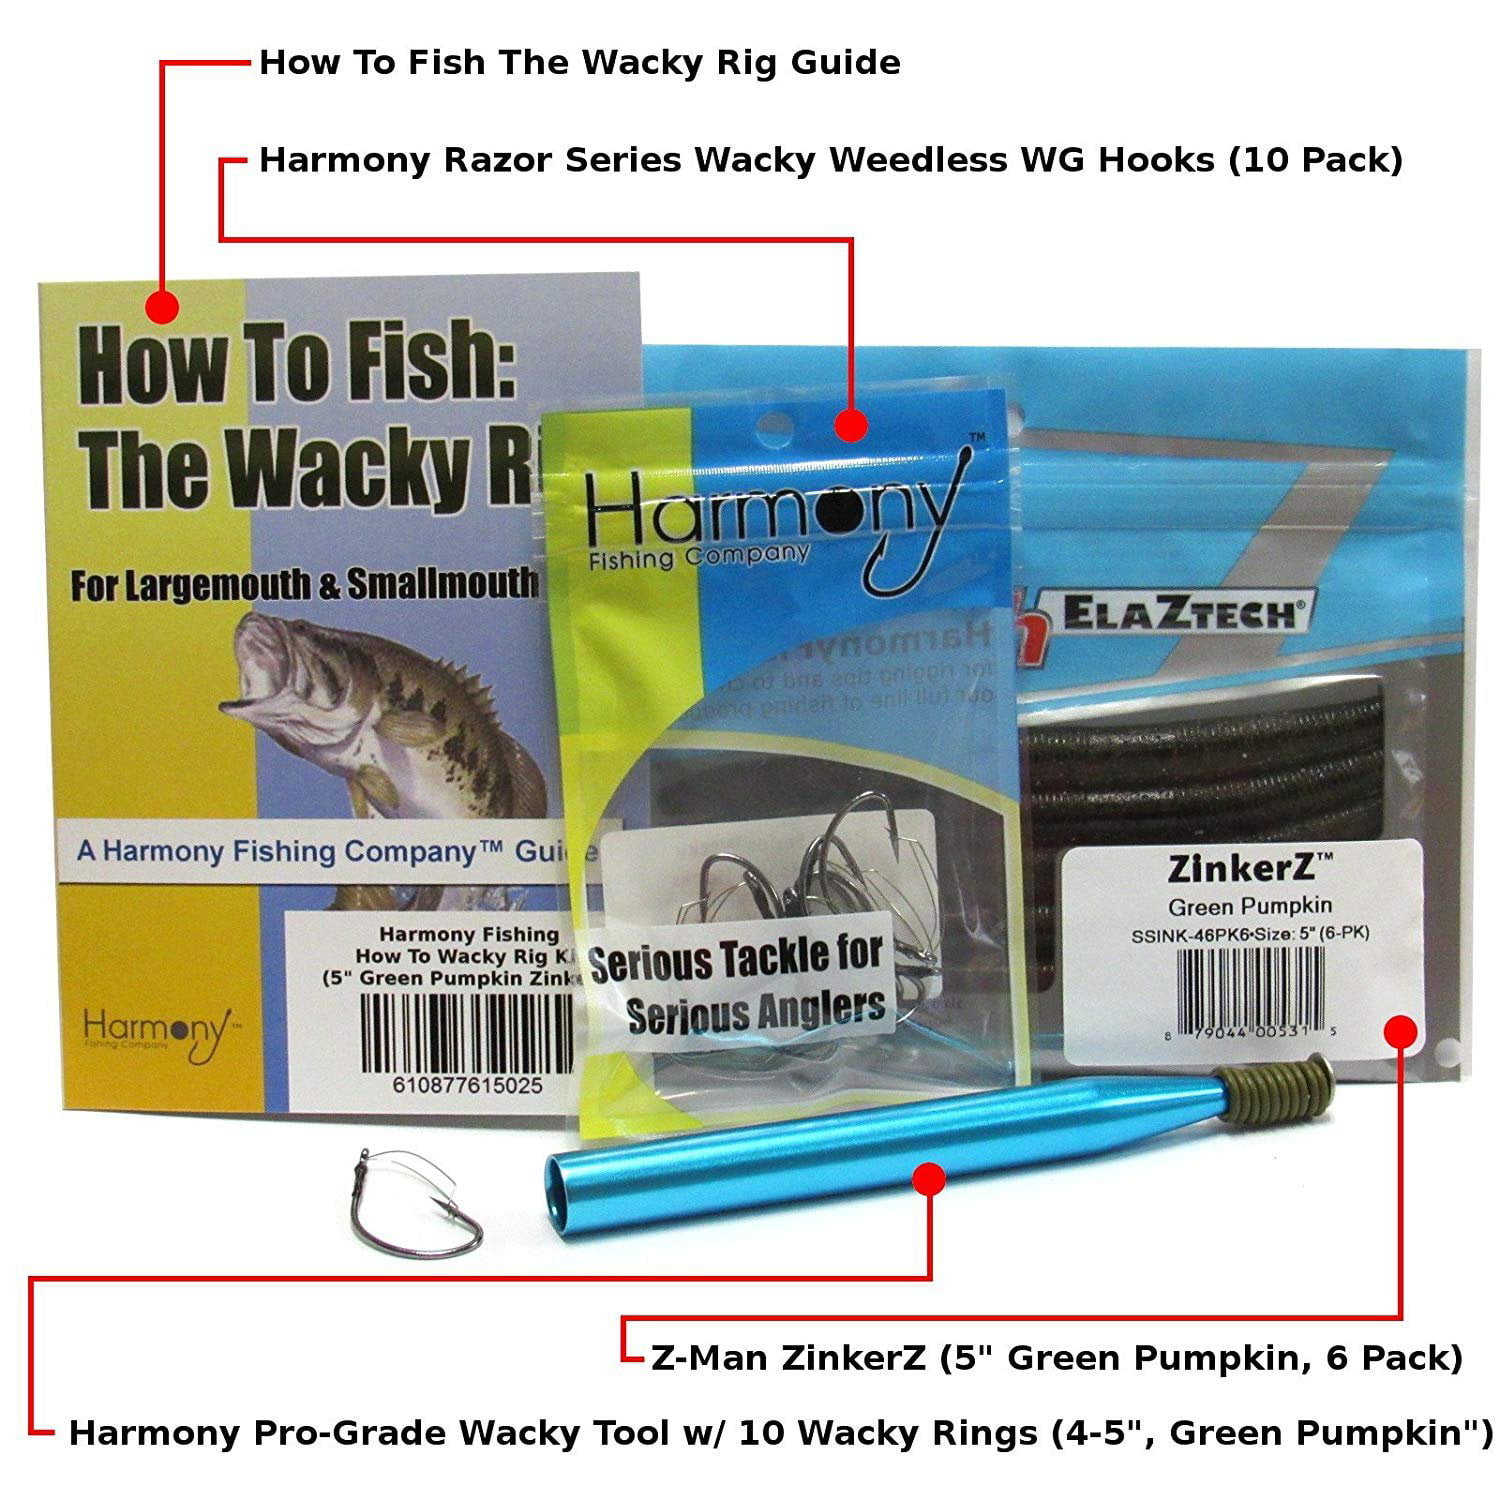 Wacky Rig Kit - Z-Man ZinkerZ 6pk + Wacky Weedless Hooks 10pk + Wacky Tool  w/10 Wacky Rings + How To Fish The Wacky Worm Guide Green Pumpkin